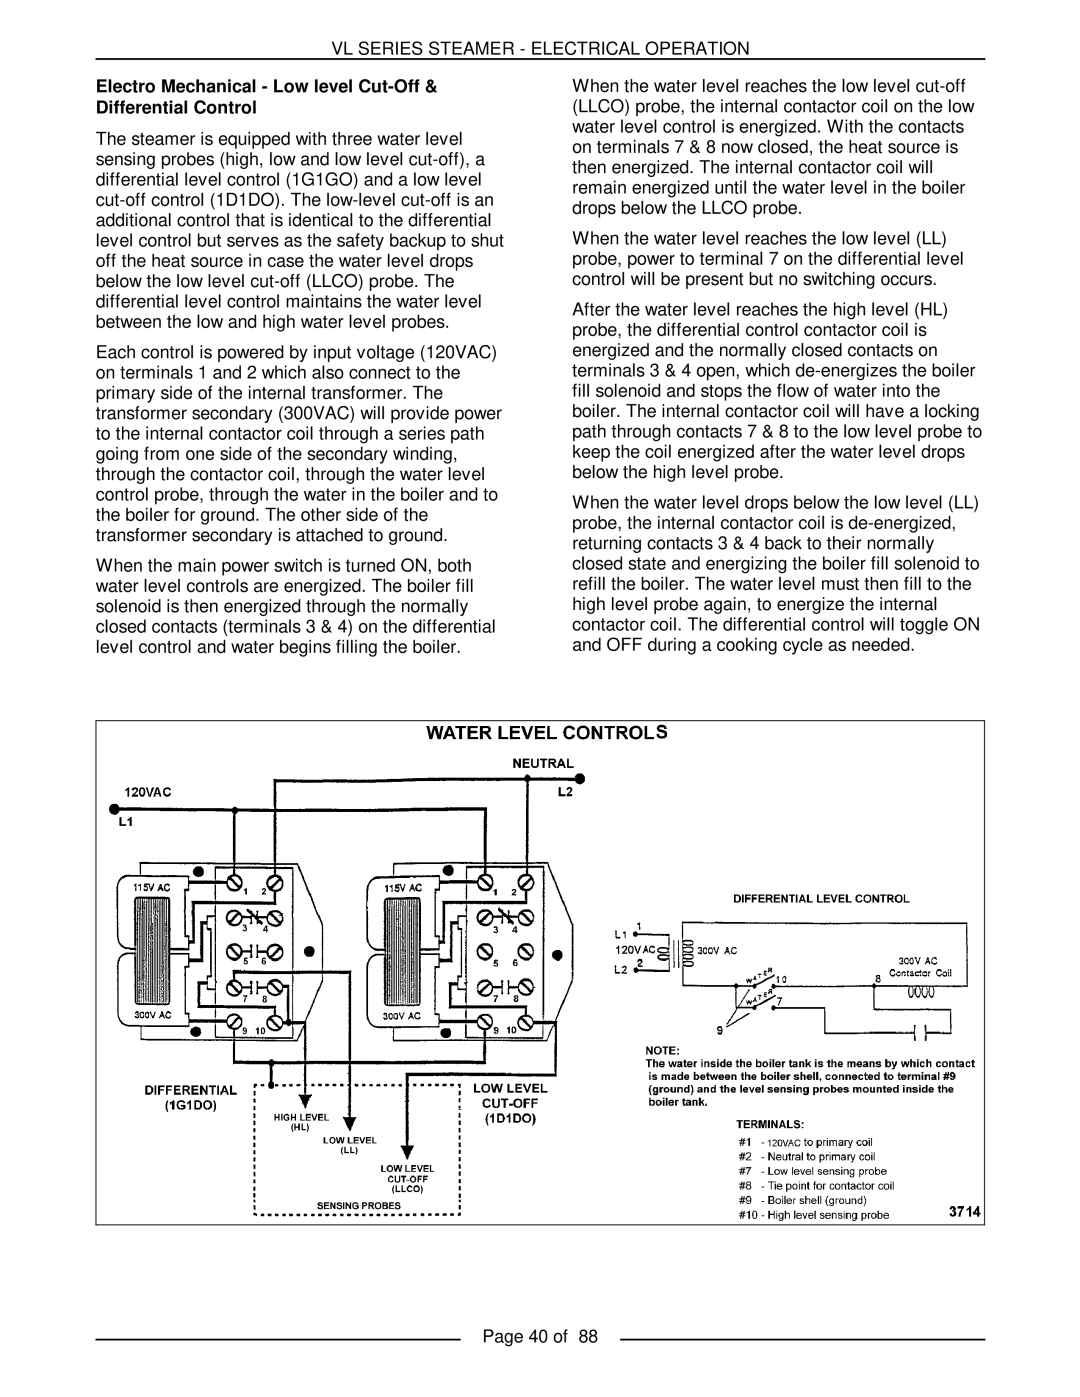 Vulcan-Hart VL3GMS, VL2GMS, VL3GAS, VL2GAS, VL2GSS, VL3GSS, VL3GPS, VL2GPS service manual Vl Series Steamer - Electrical Operation 